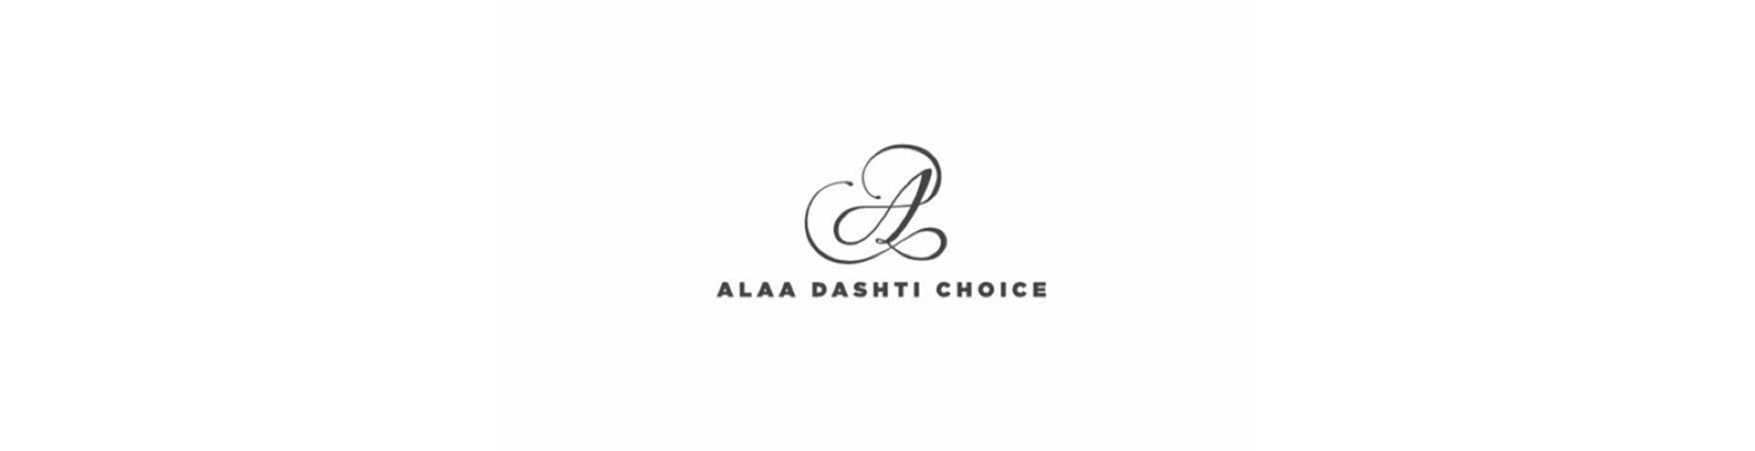 Alaa Dashti Choice